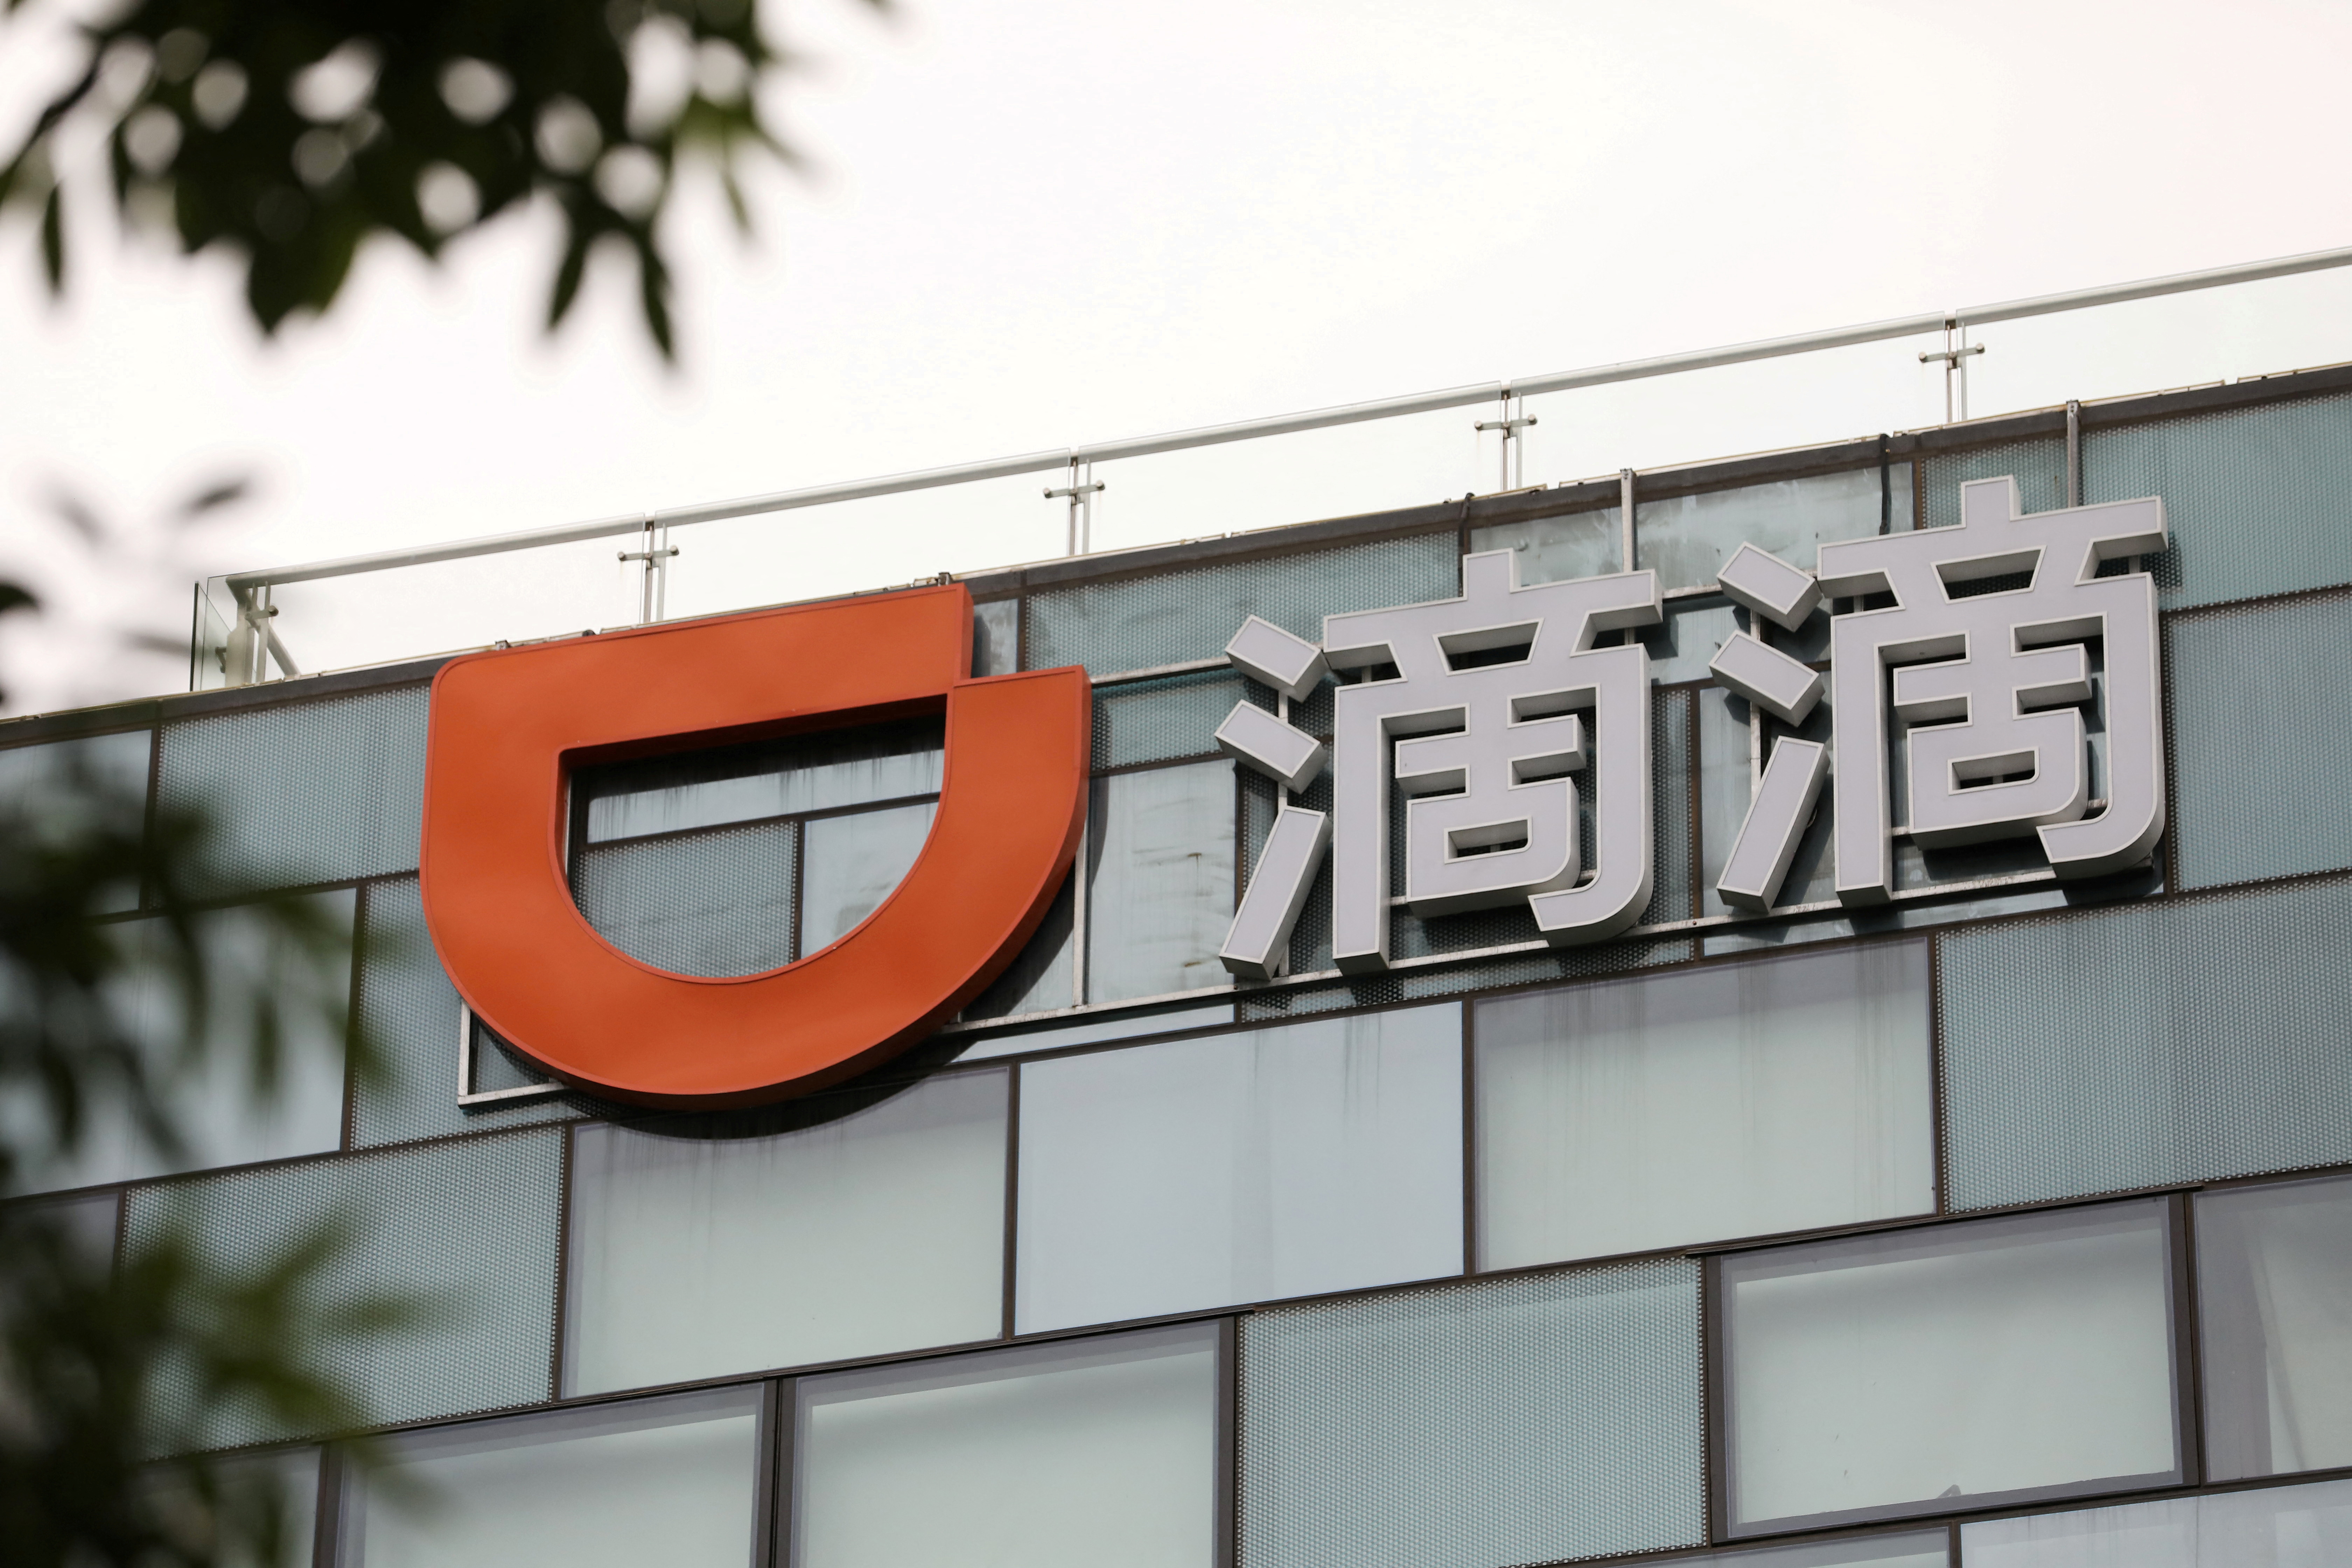 Didi, Lenovo founders go private on China social media, joining retreat from spotlight